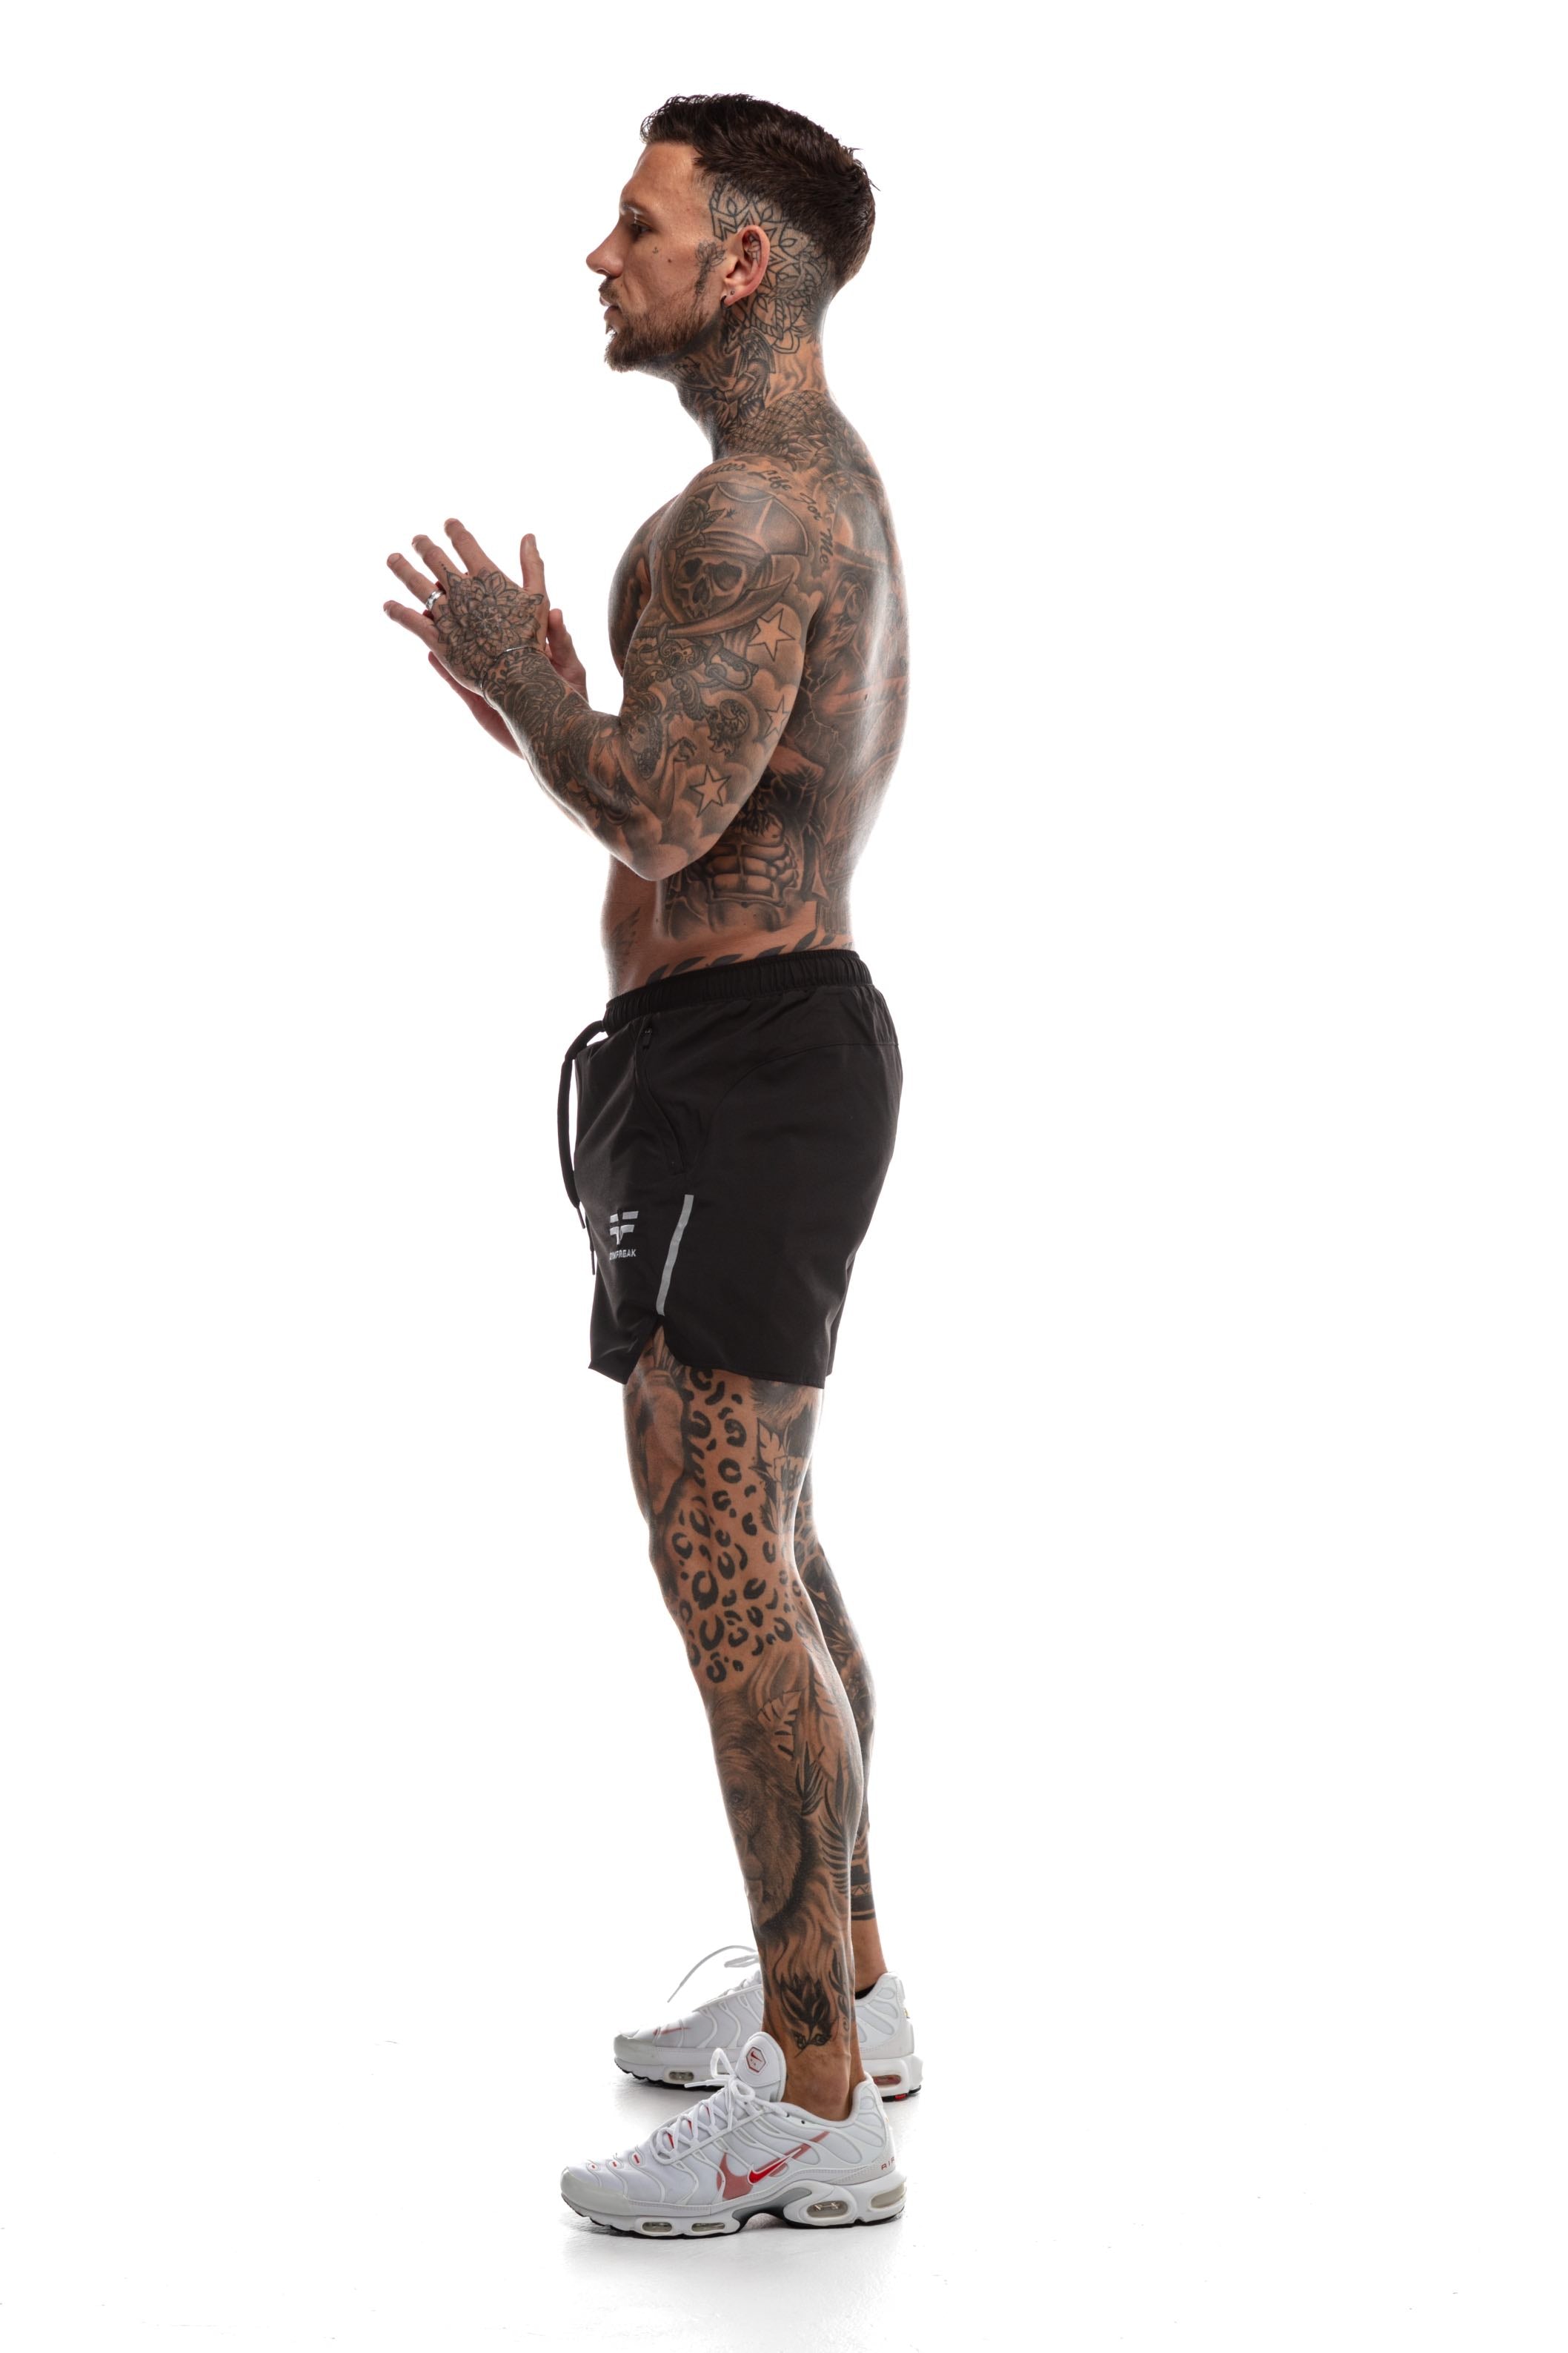 GymFreak Mens Fusion Shorts - Black - 3.5 inch